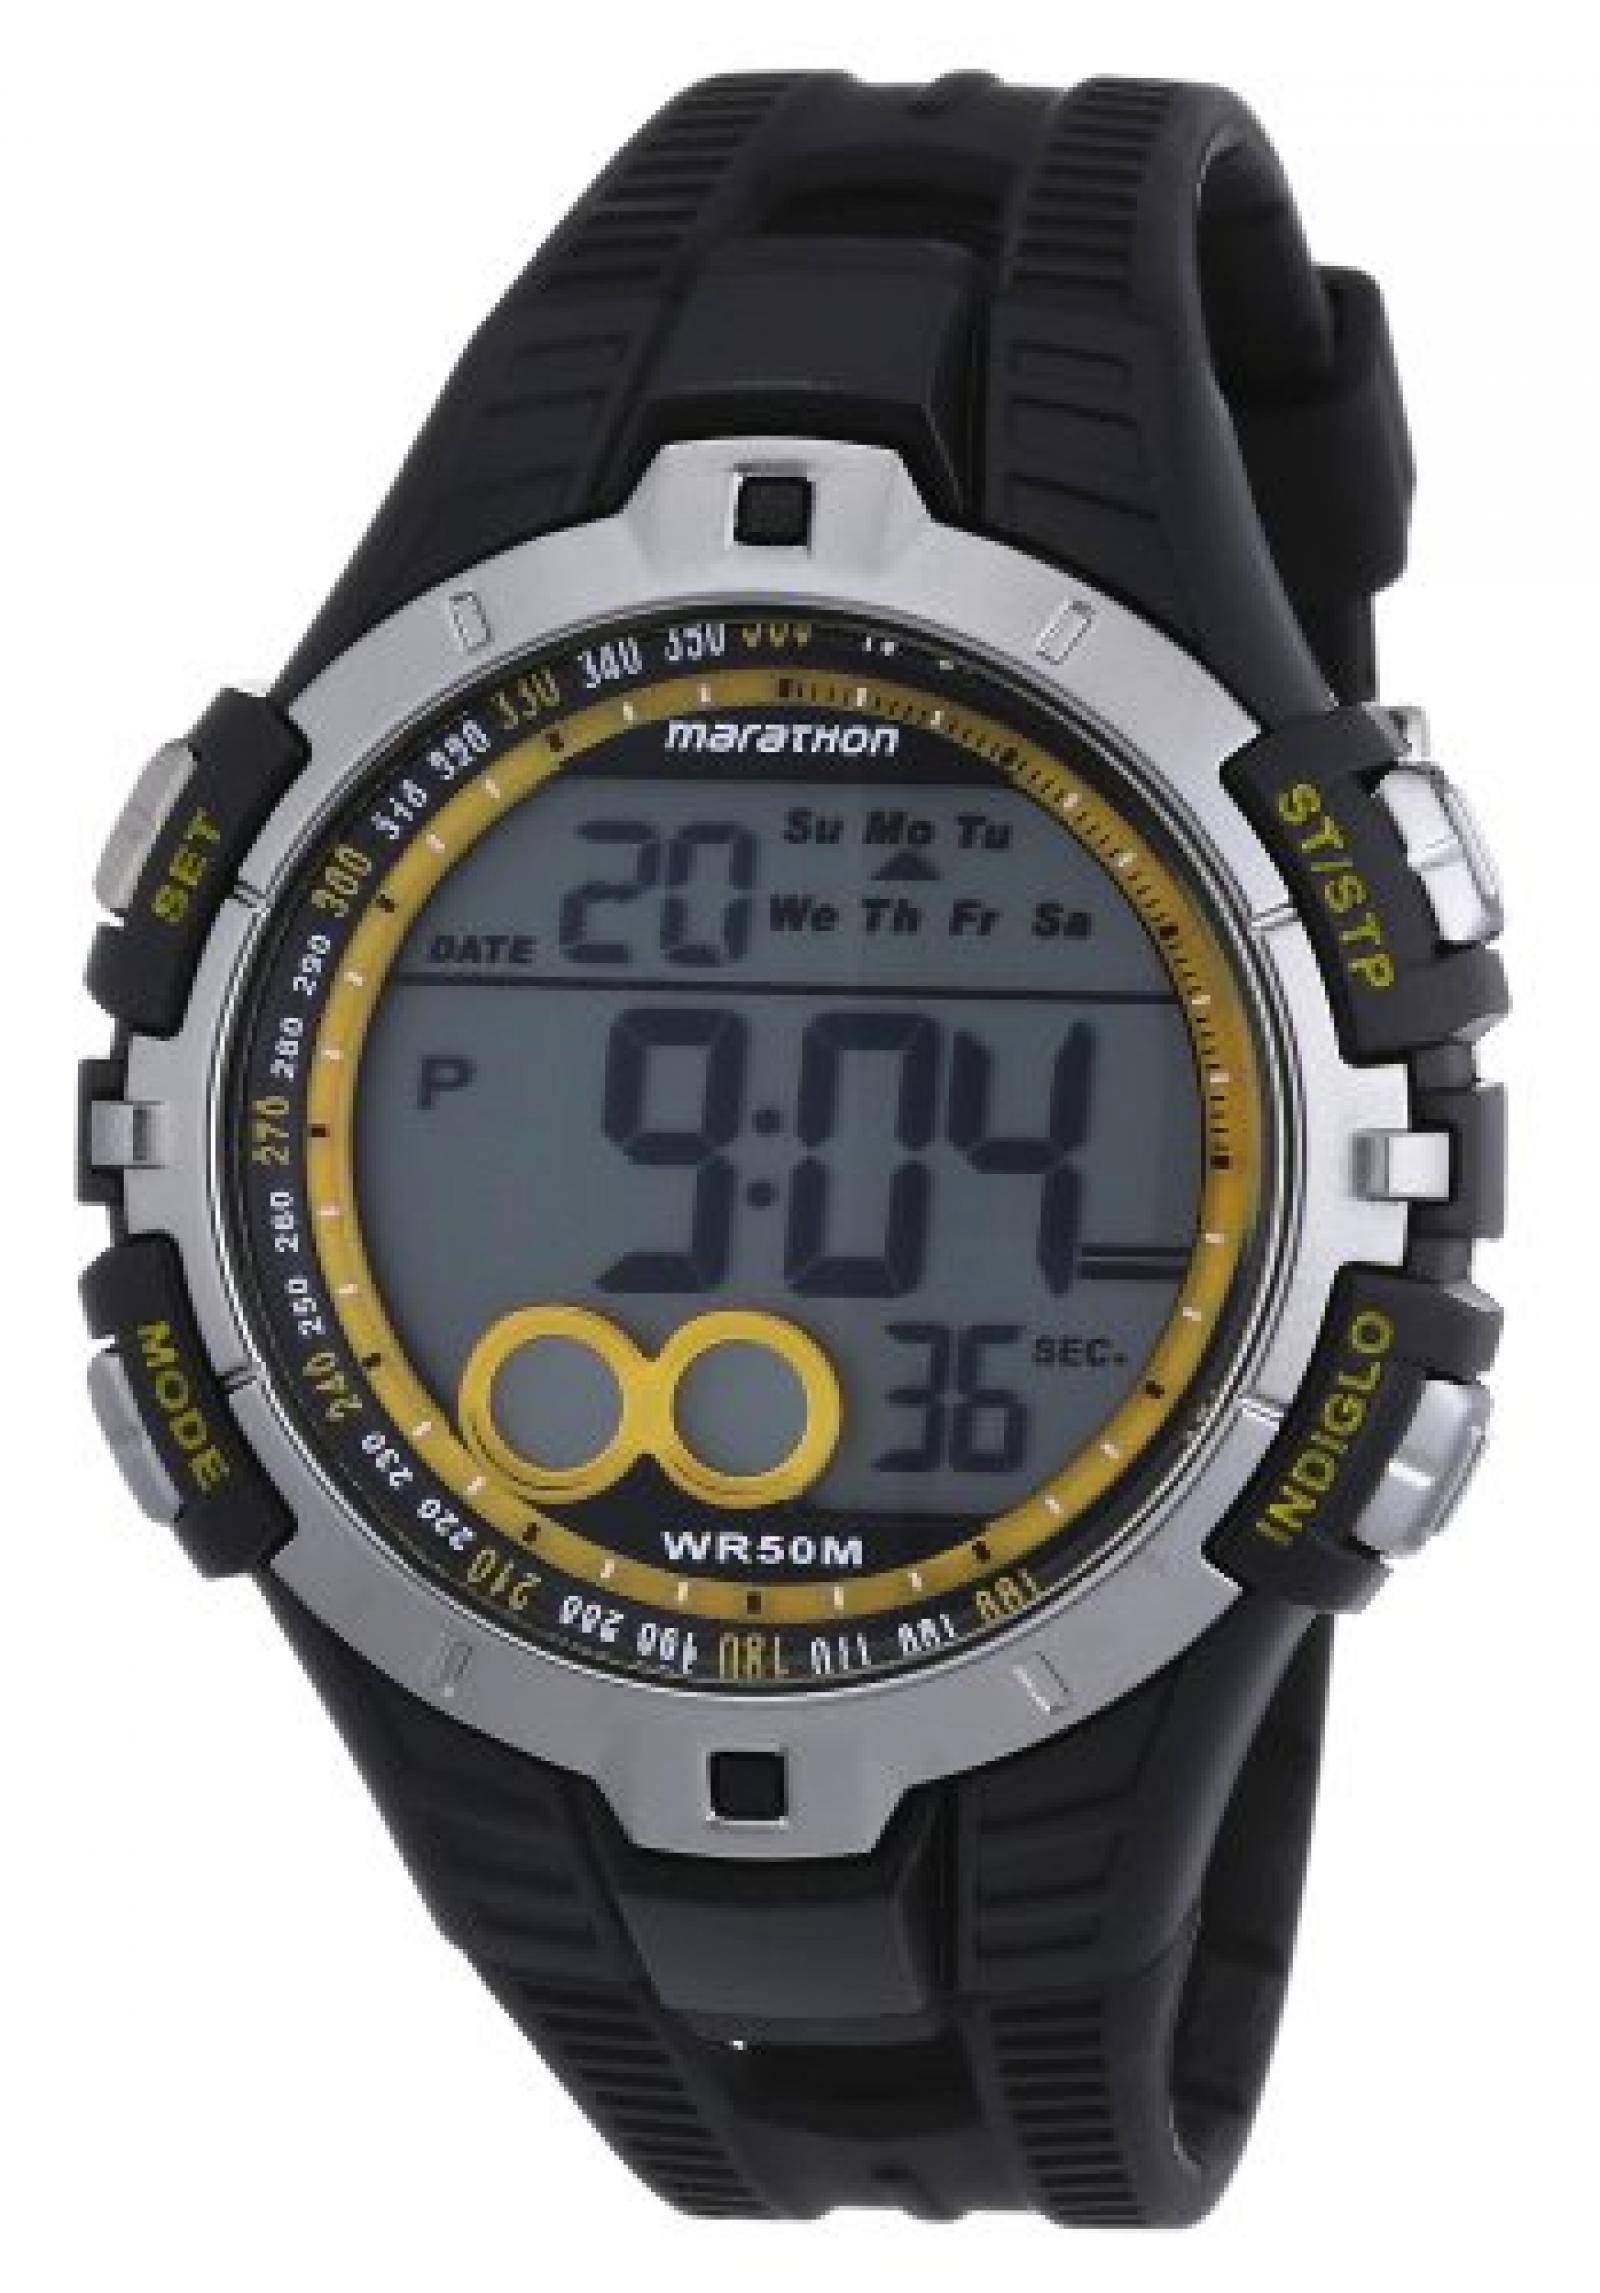 Timex Herren-Armbanduhr Marathon Lap Timer Digital Quarz T5K421 